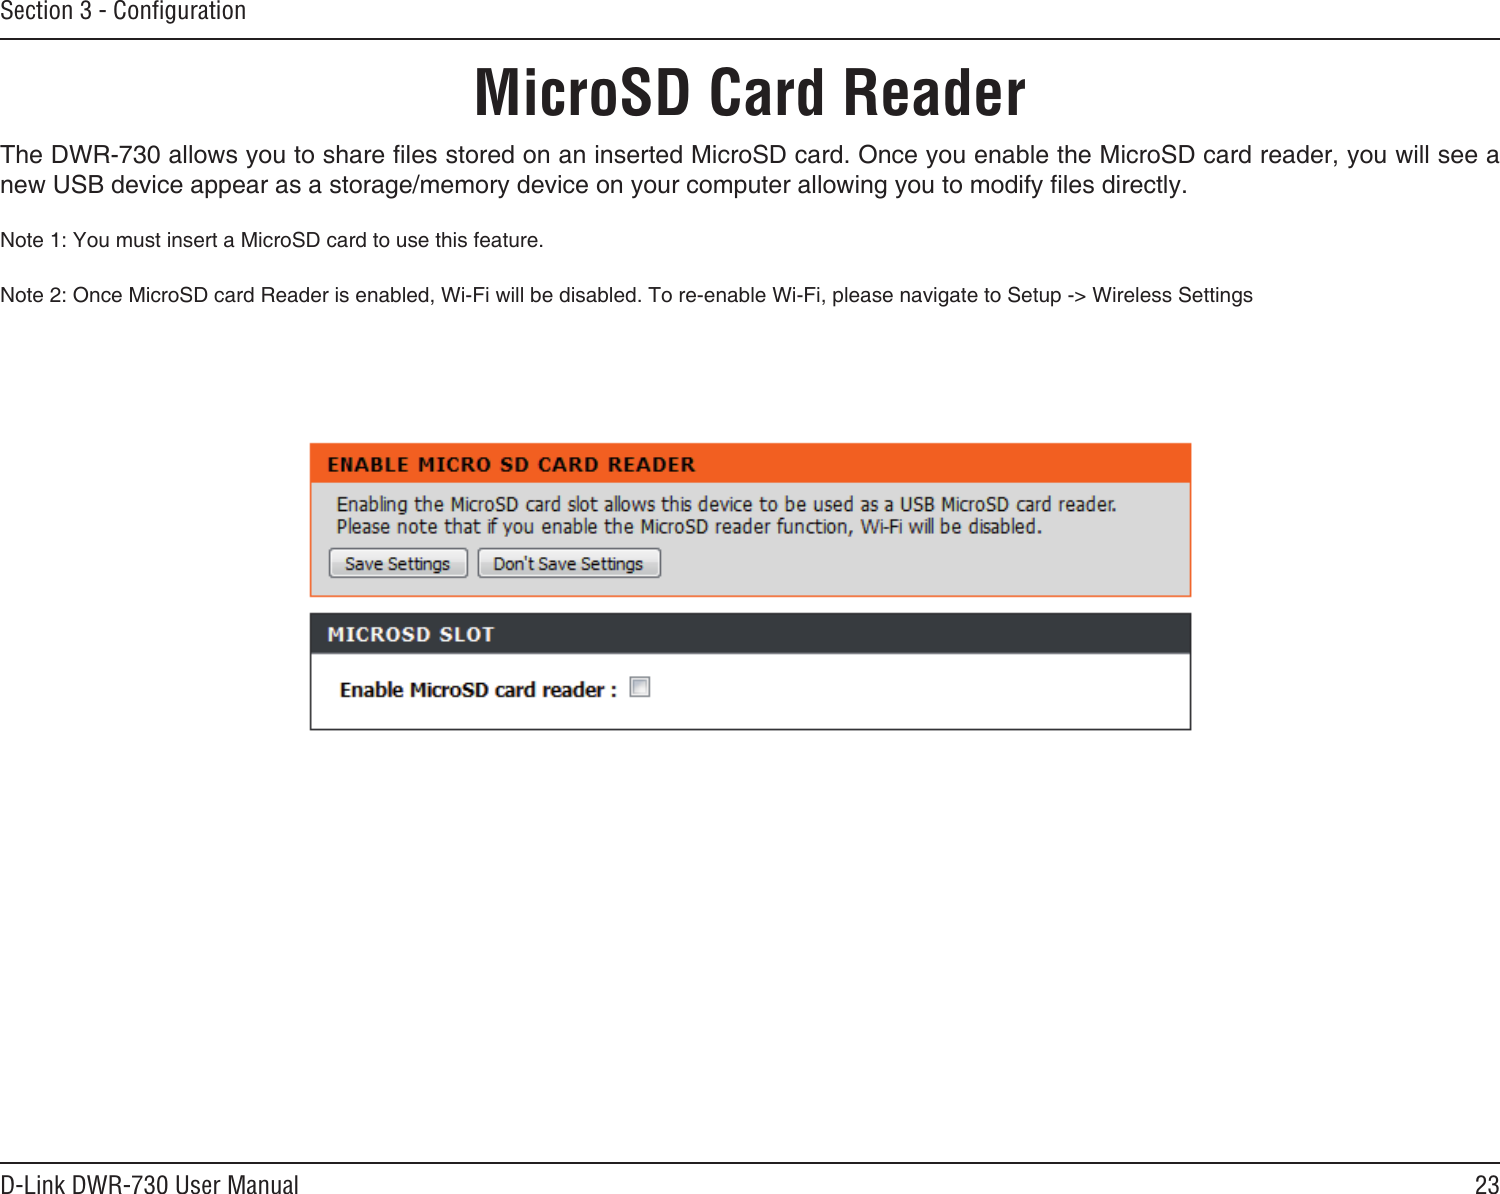 23D-Link DWR-730 User ManualSection 3 - ConﬁgurationMicroSD Card Reader